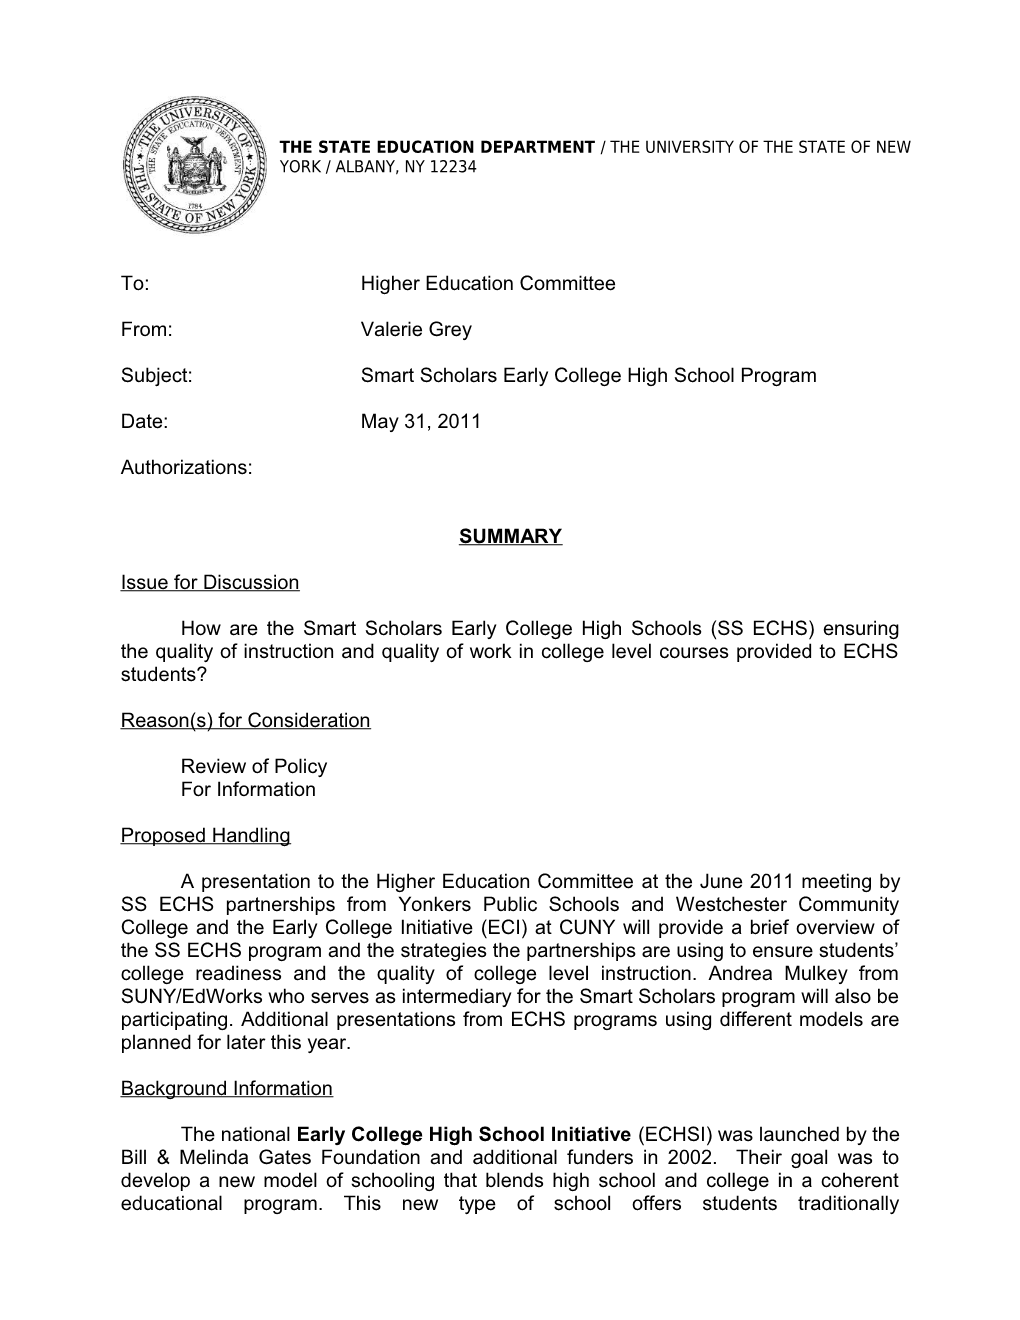 Subject: Smart Scholars Early College High School Program